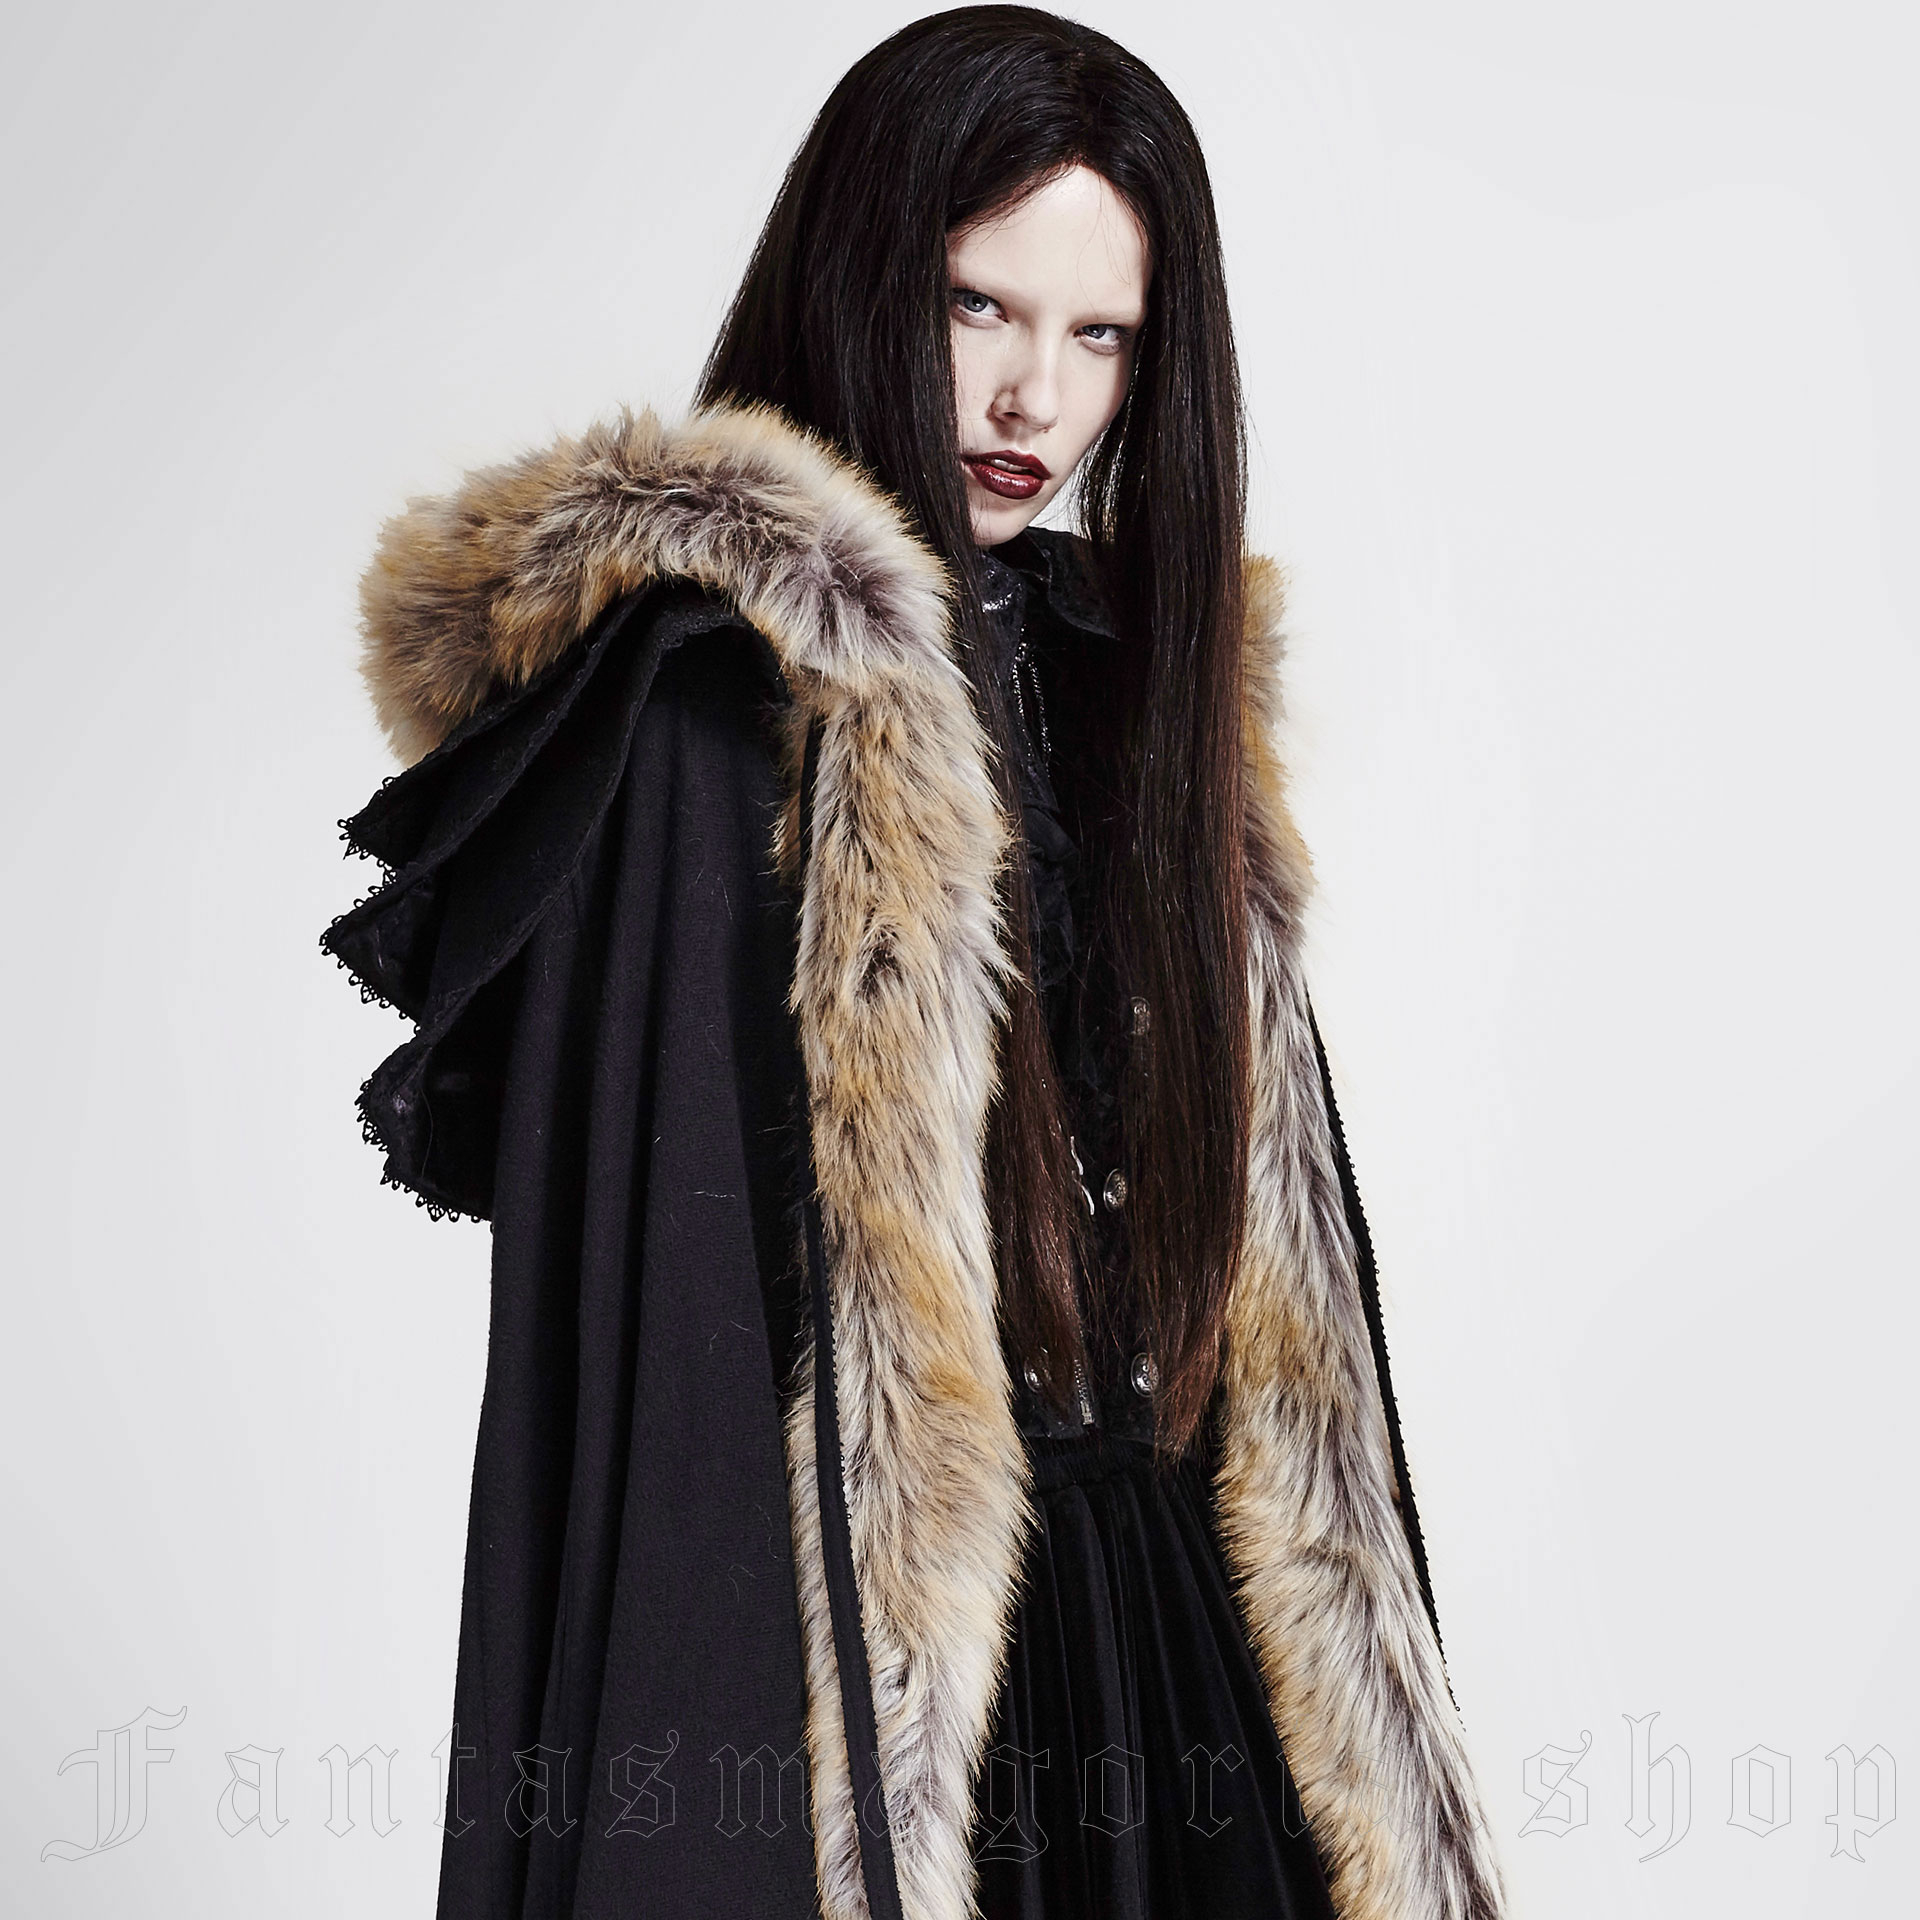 Foxa - Women's Black Hooded Cloak Trimmed with Fur